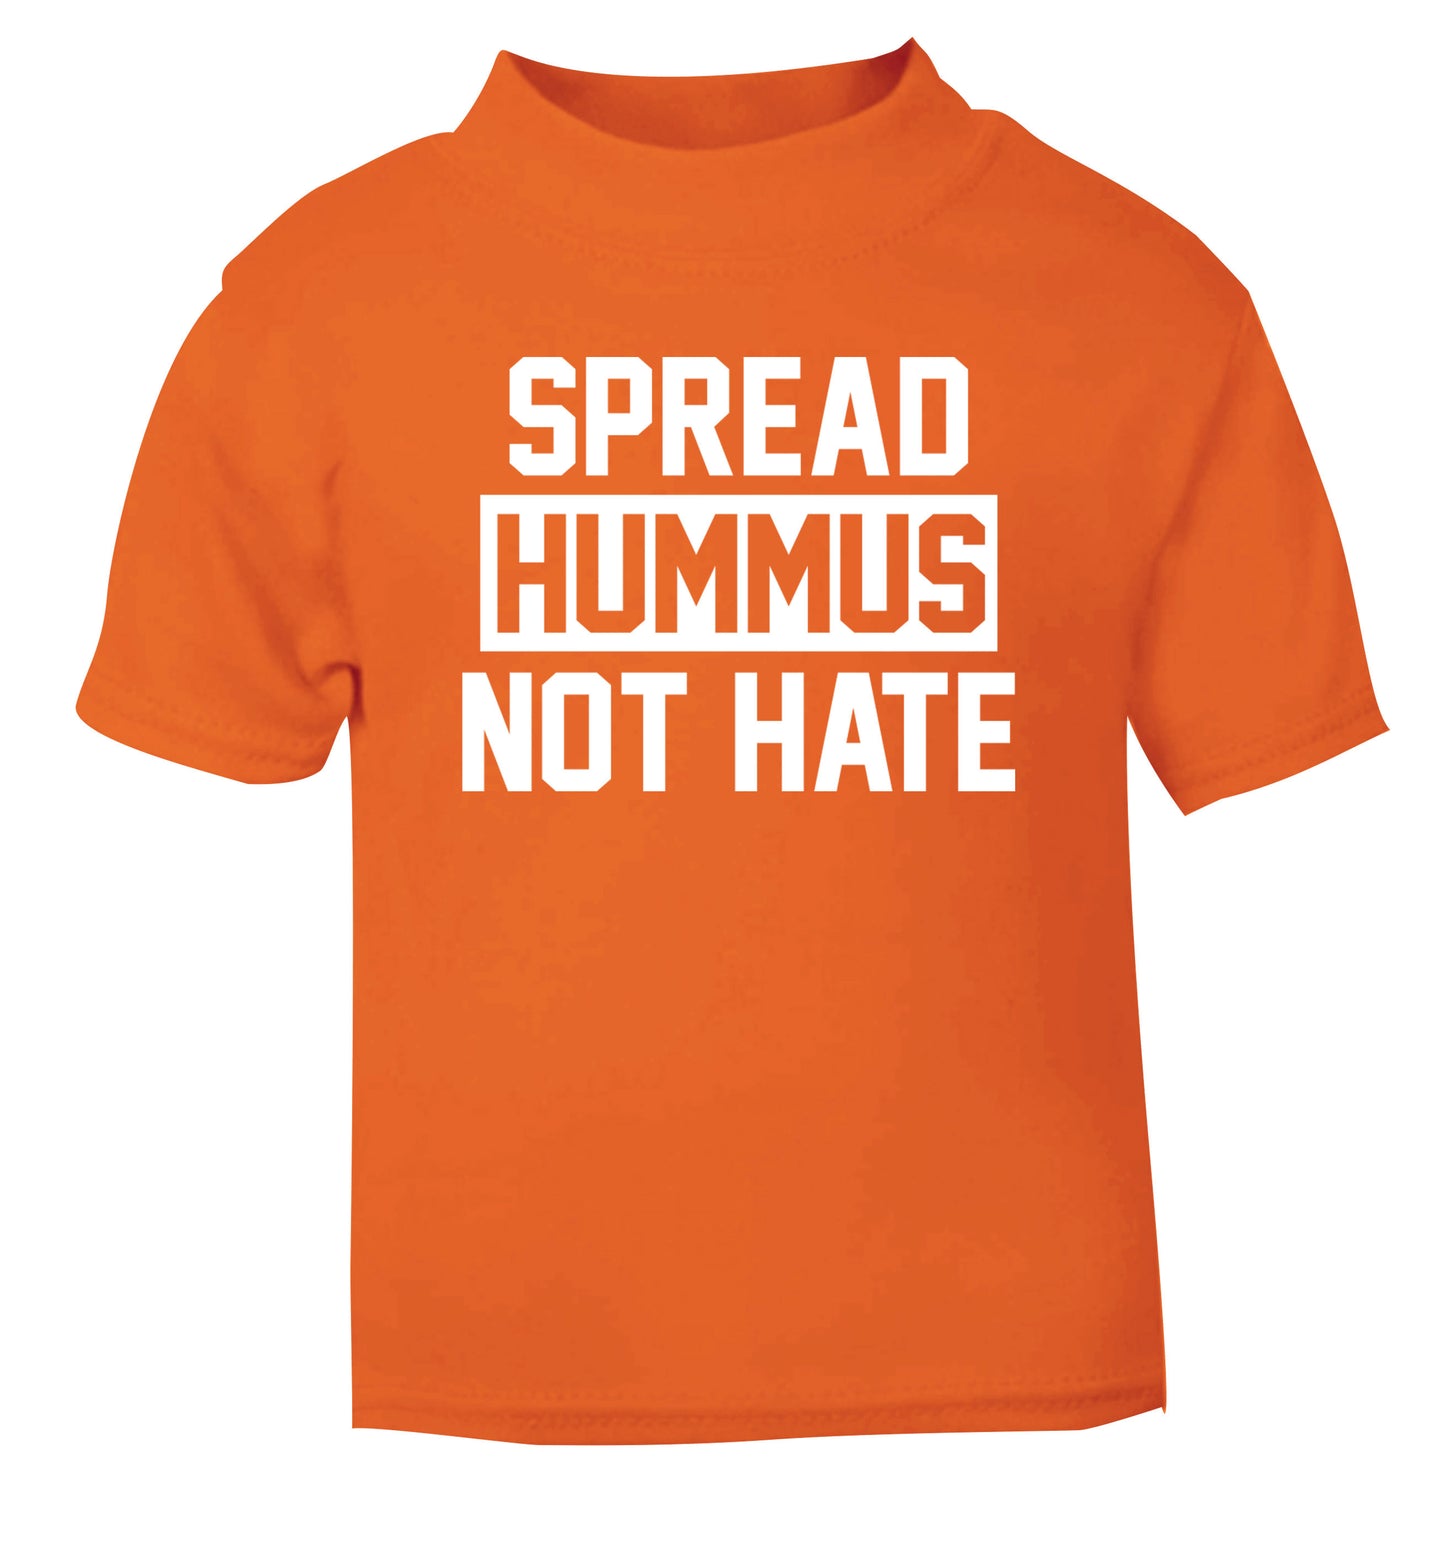 Spread hummus not hate orange Baby Toddler Tshirt 2 Years